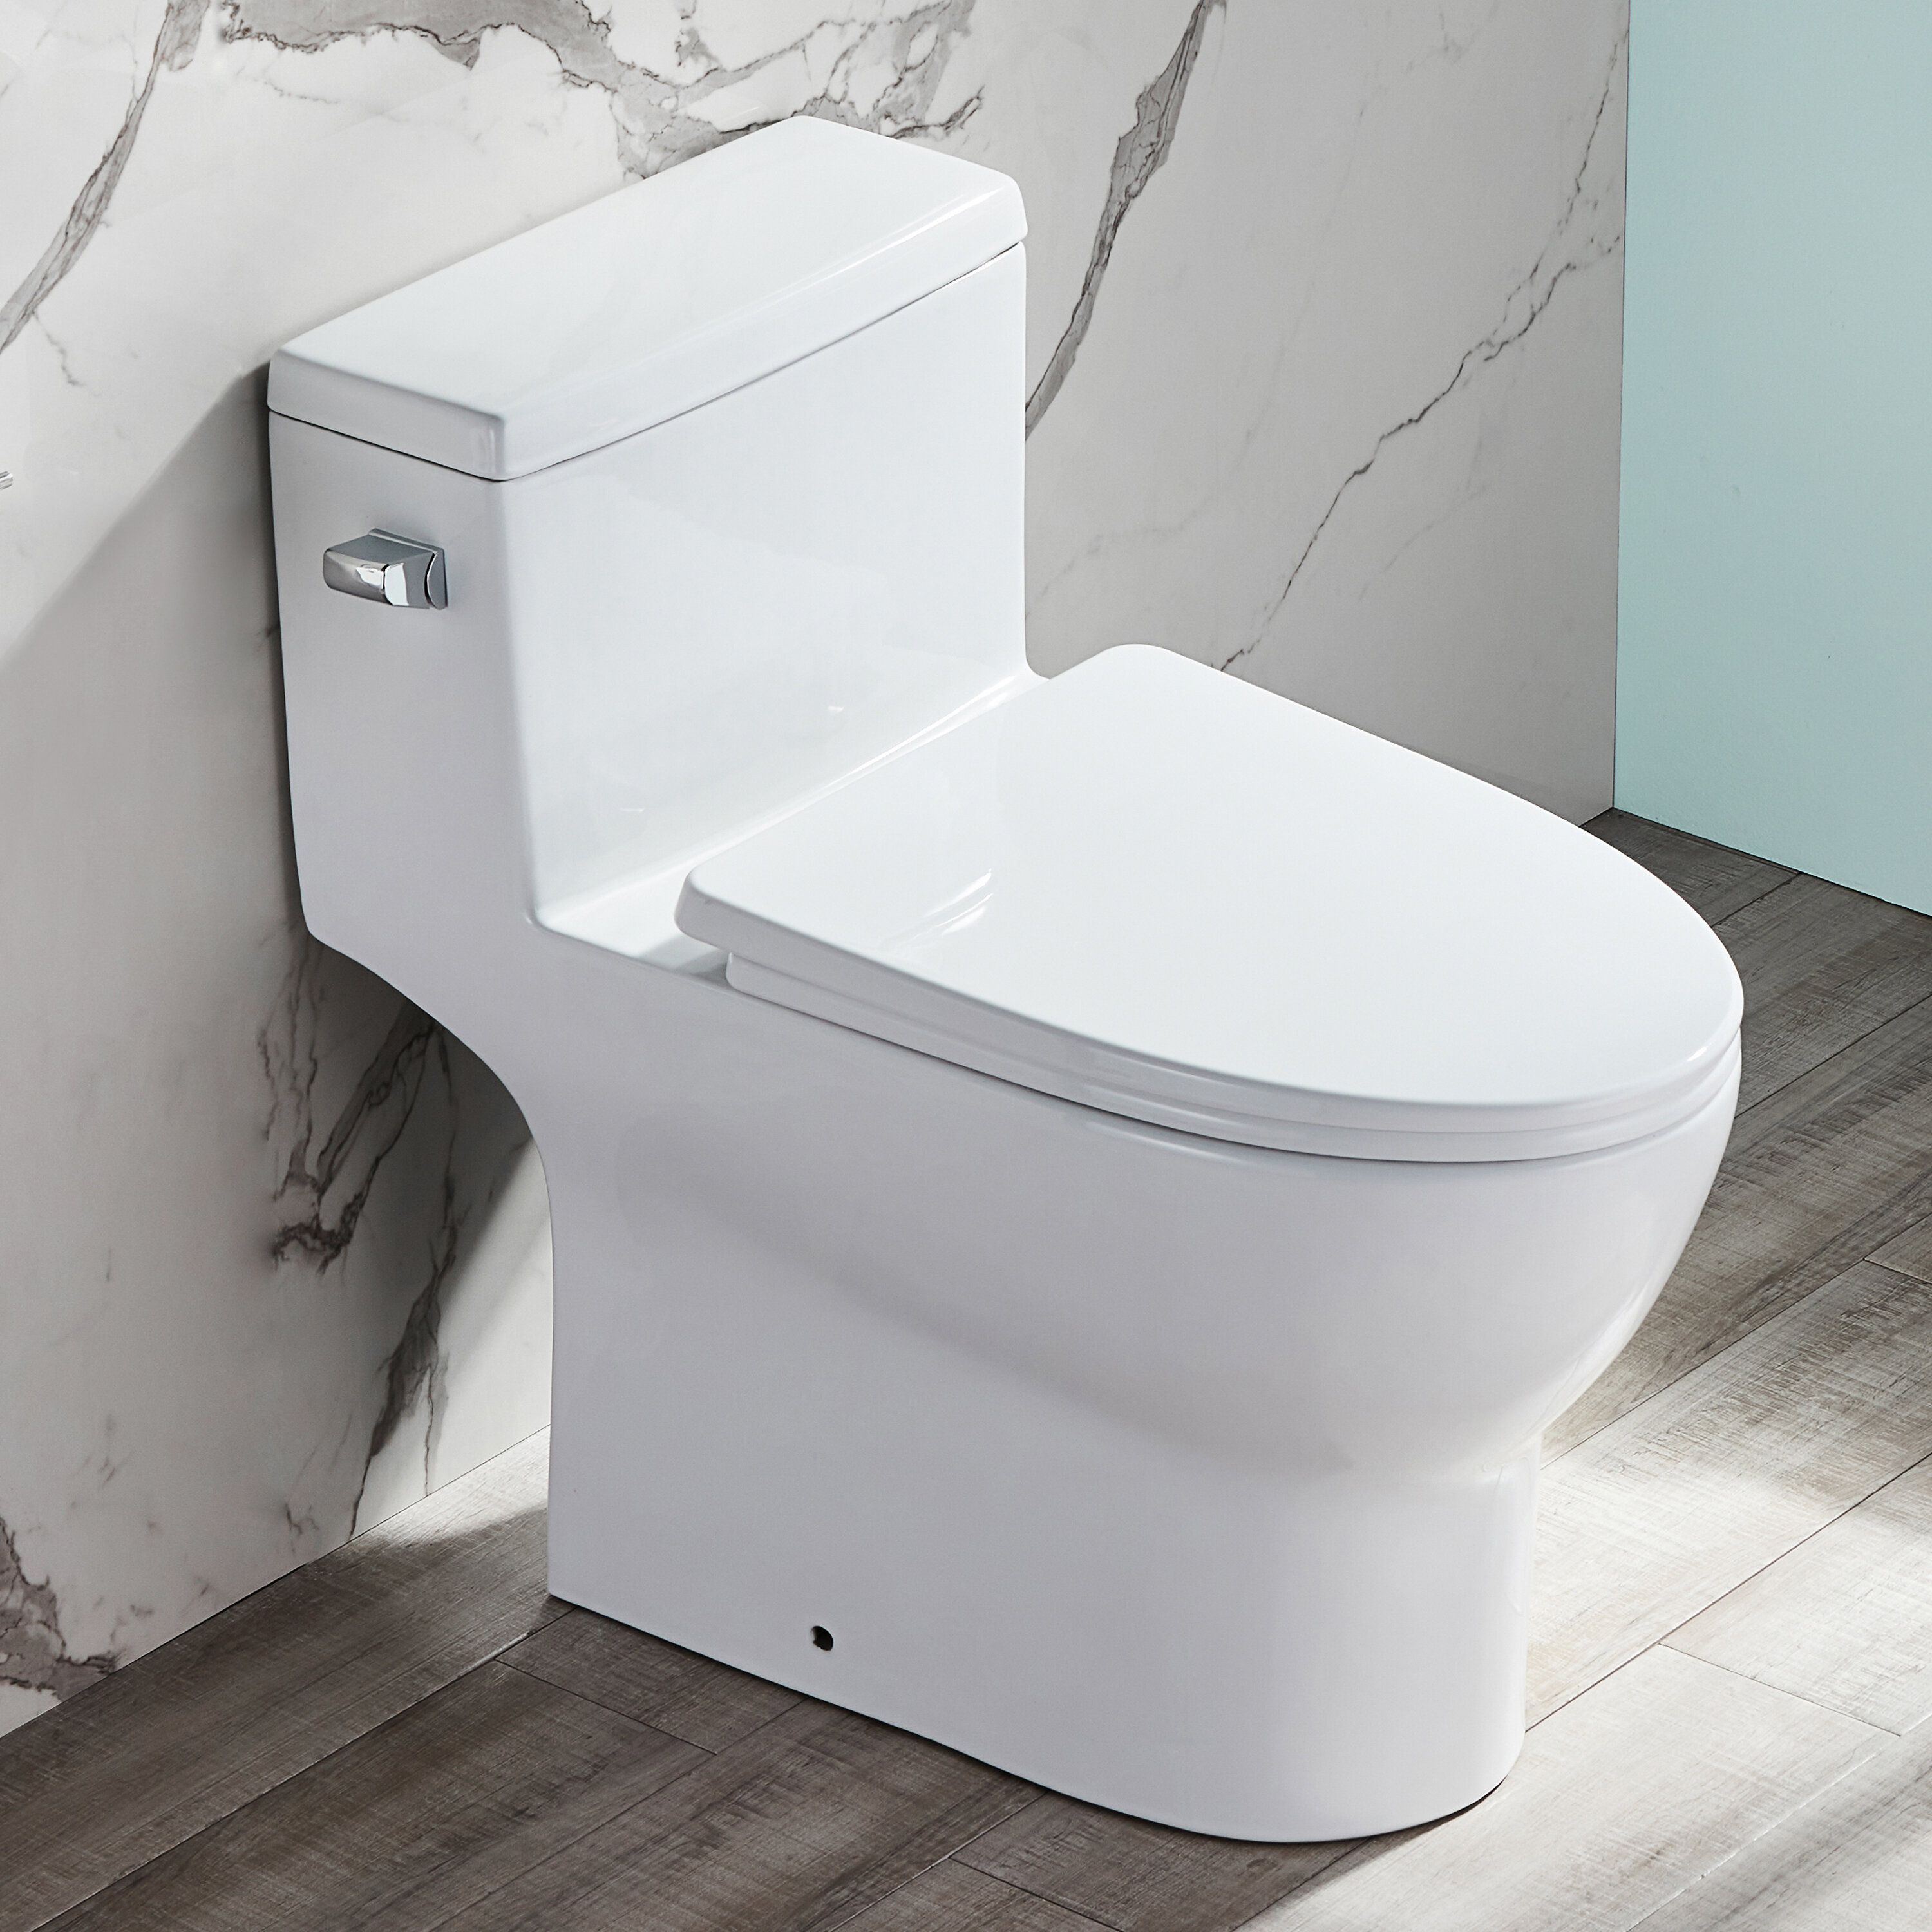 Deervalley Comfort Height 1 28 Gpf Water Efficient Elongated One Piece Toilet Seat Included Reviews Wayfair